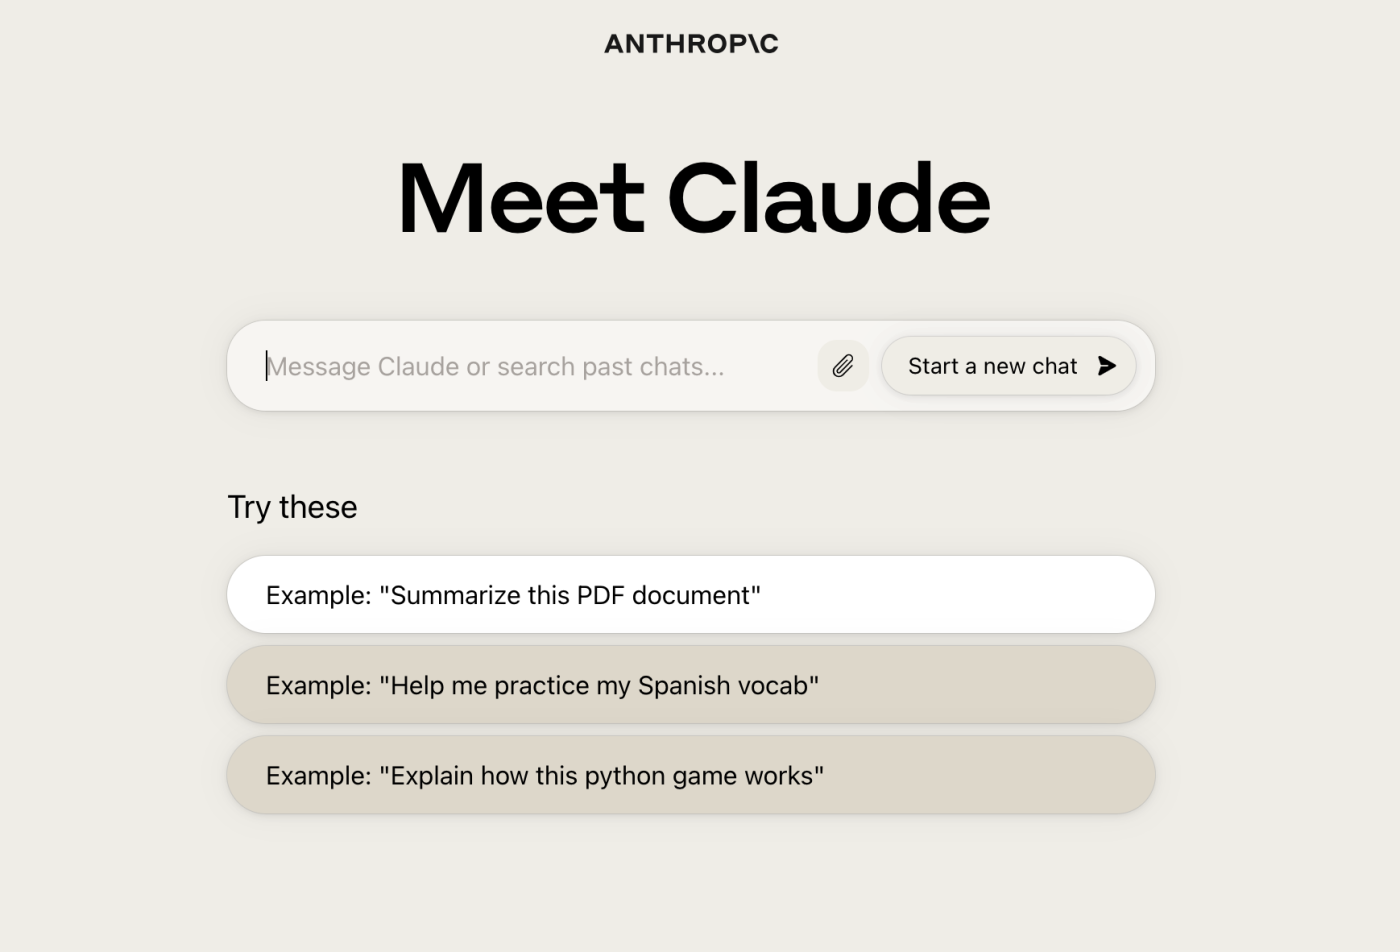 Claude, Anthropic's AI chatbot